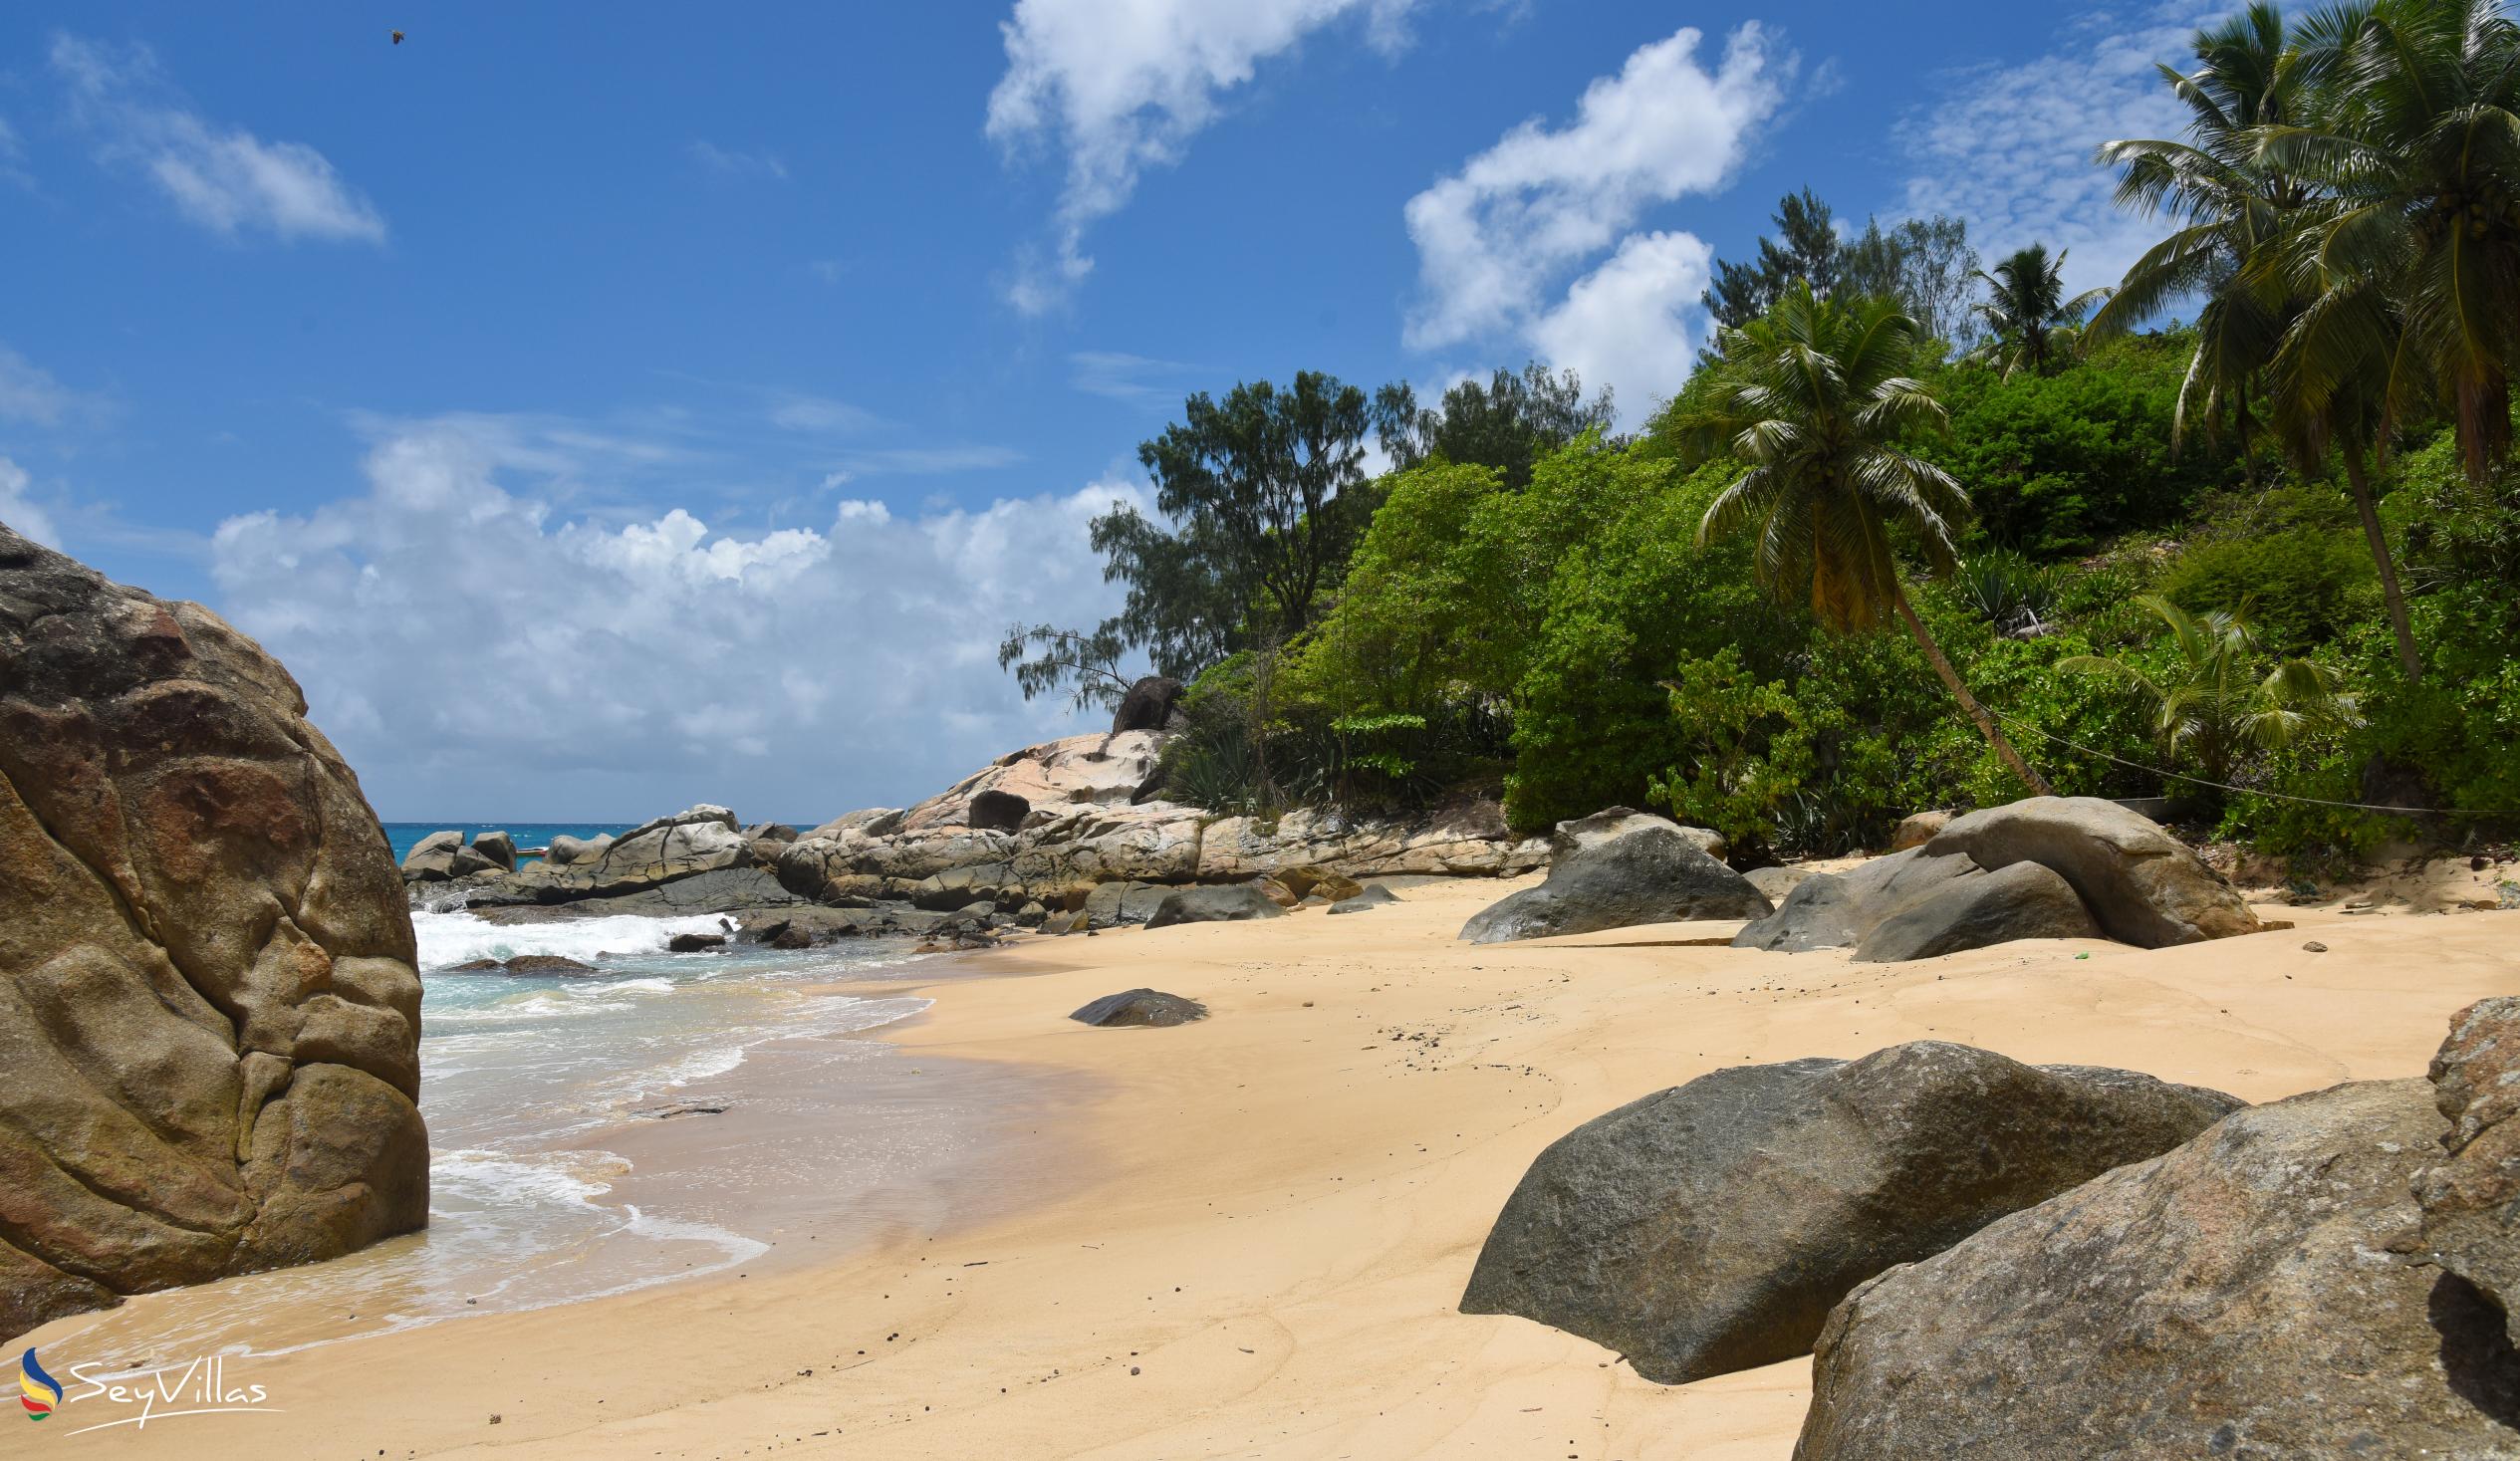 Foto 4: Anse Machabée - Mahé (Seychelles)